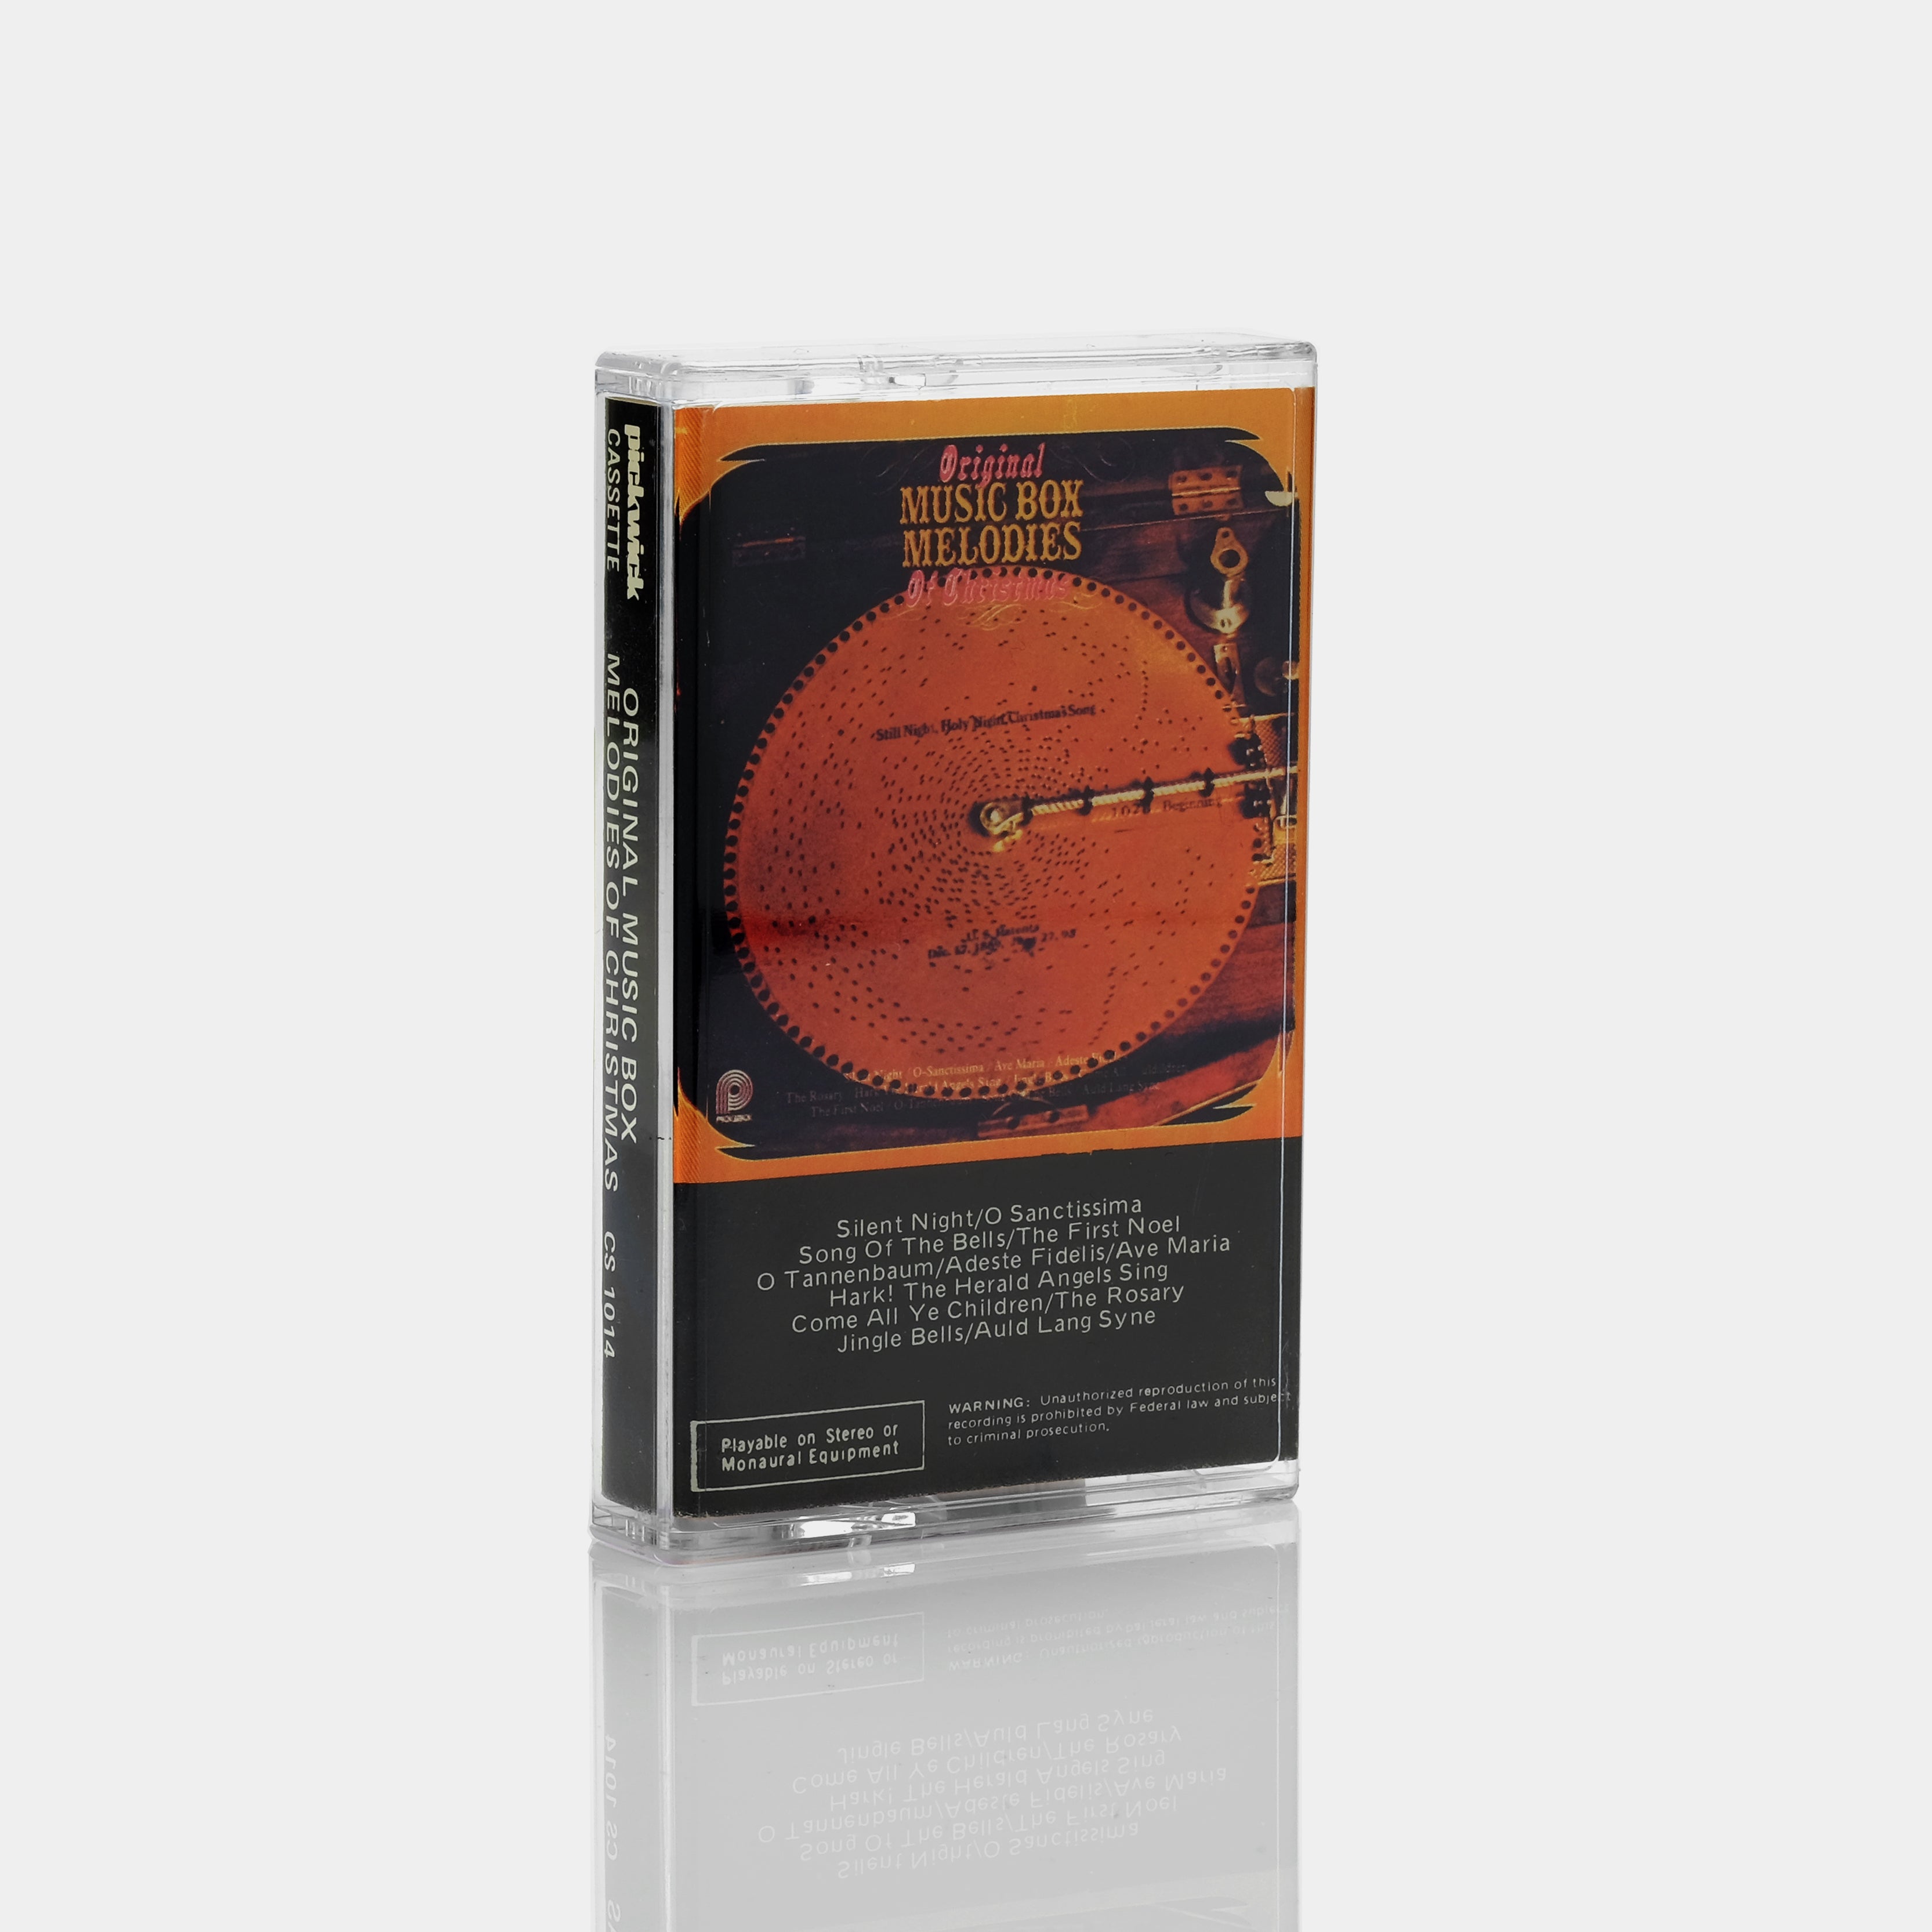 Original Music Box Melodies of Christmas Cassette Tape